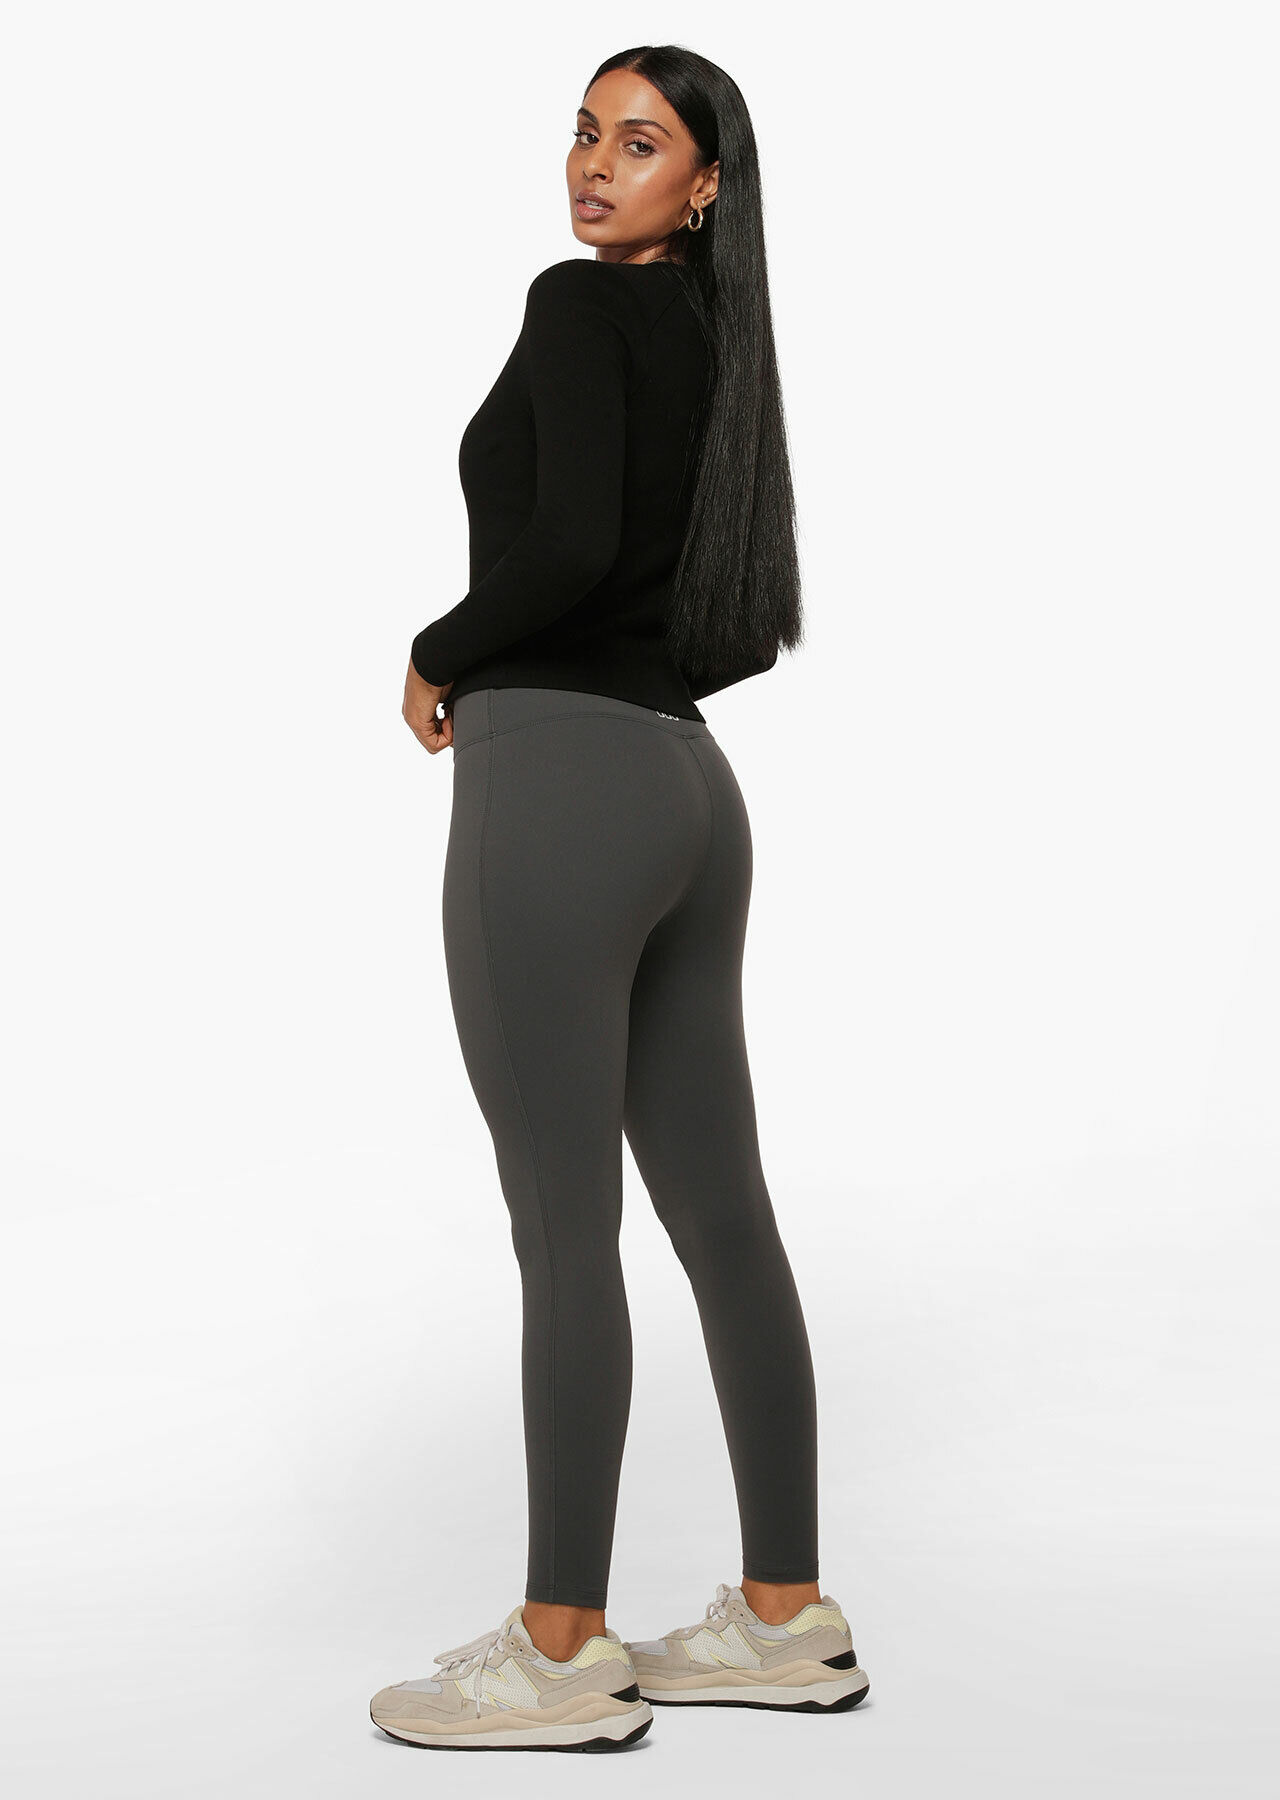 Ladies Thermal Leggings Brushed Cosy Womens Black Warm Lightweight 1 Pair  S-XL | eBay